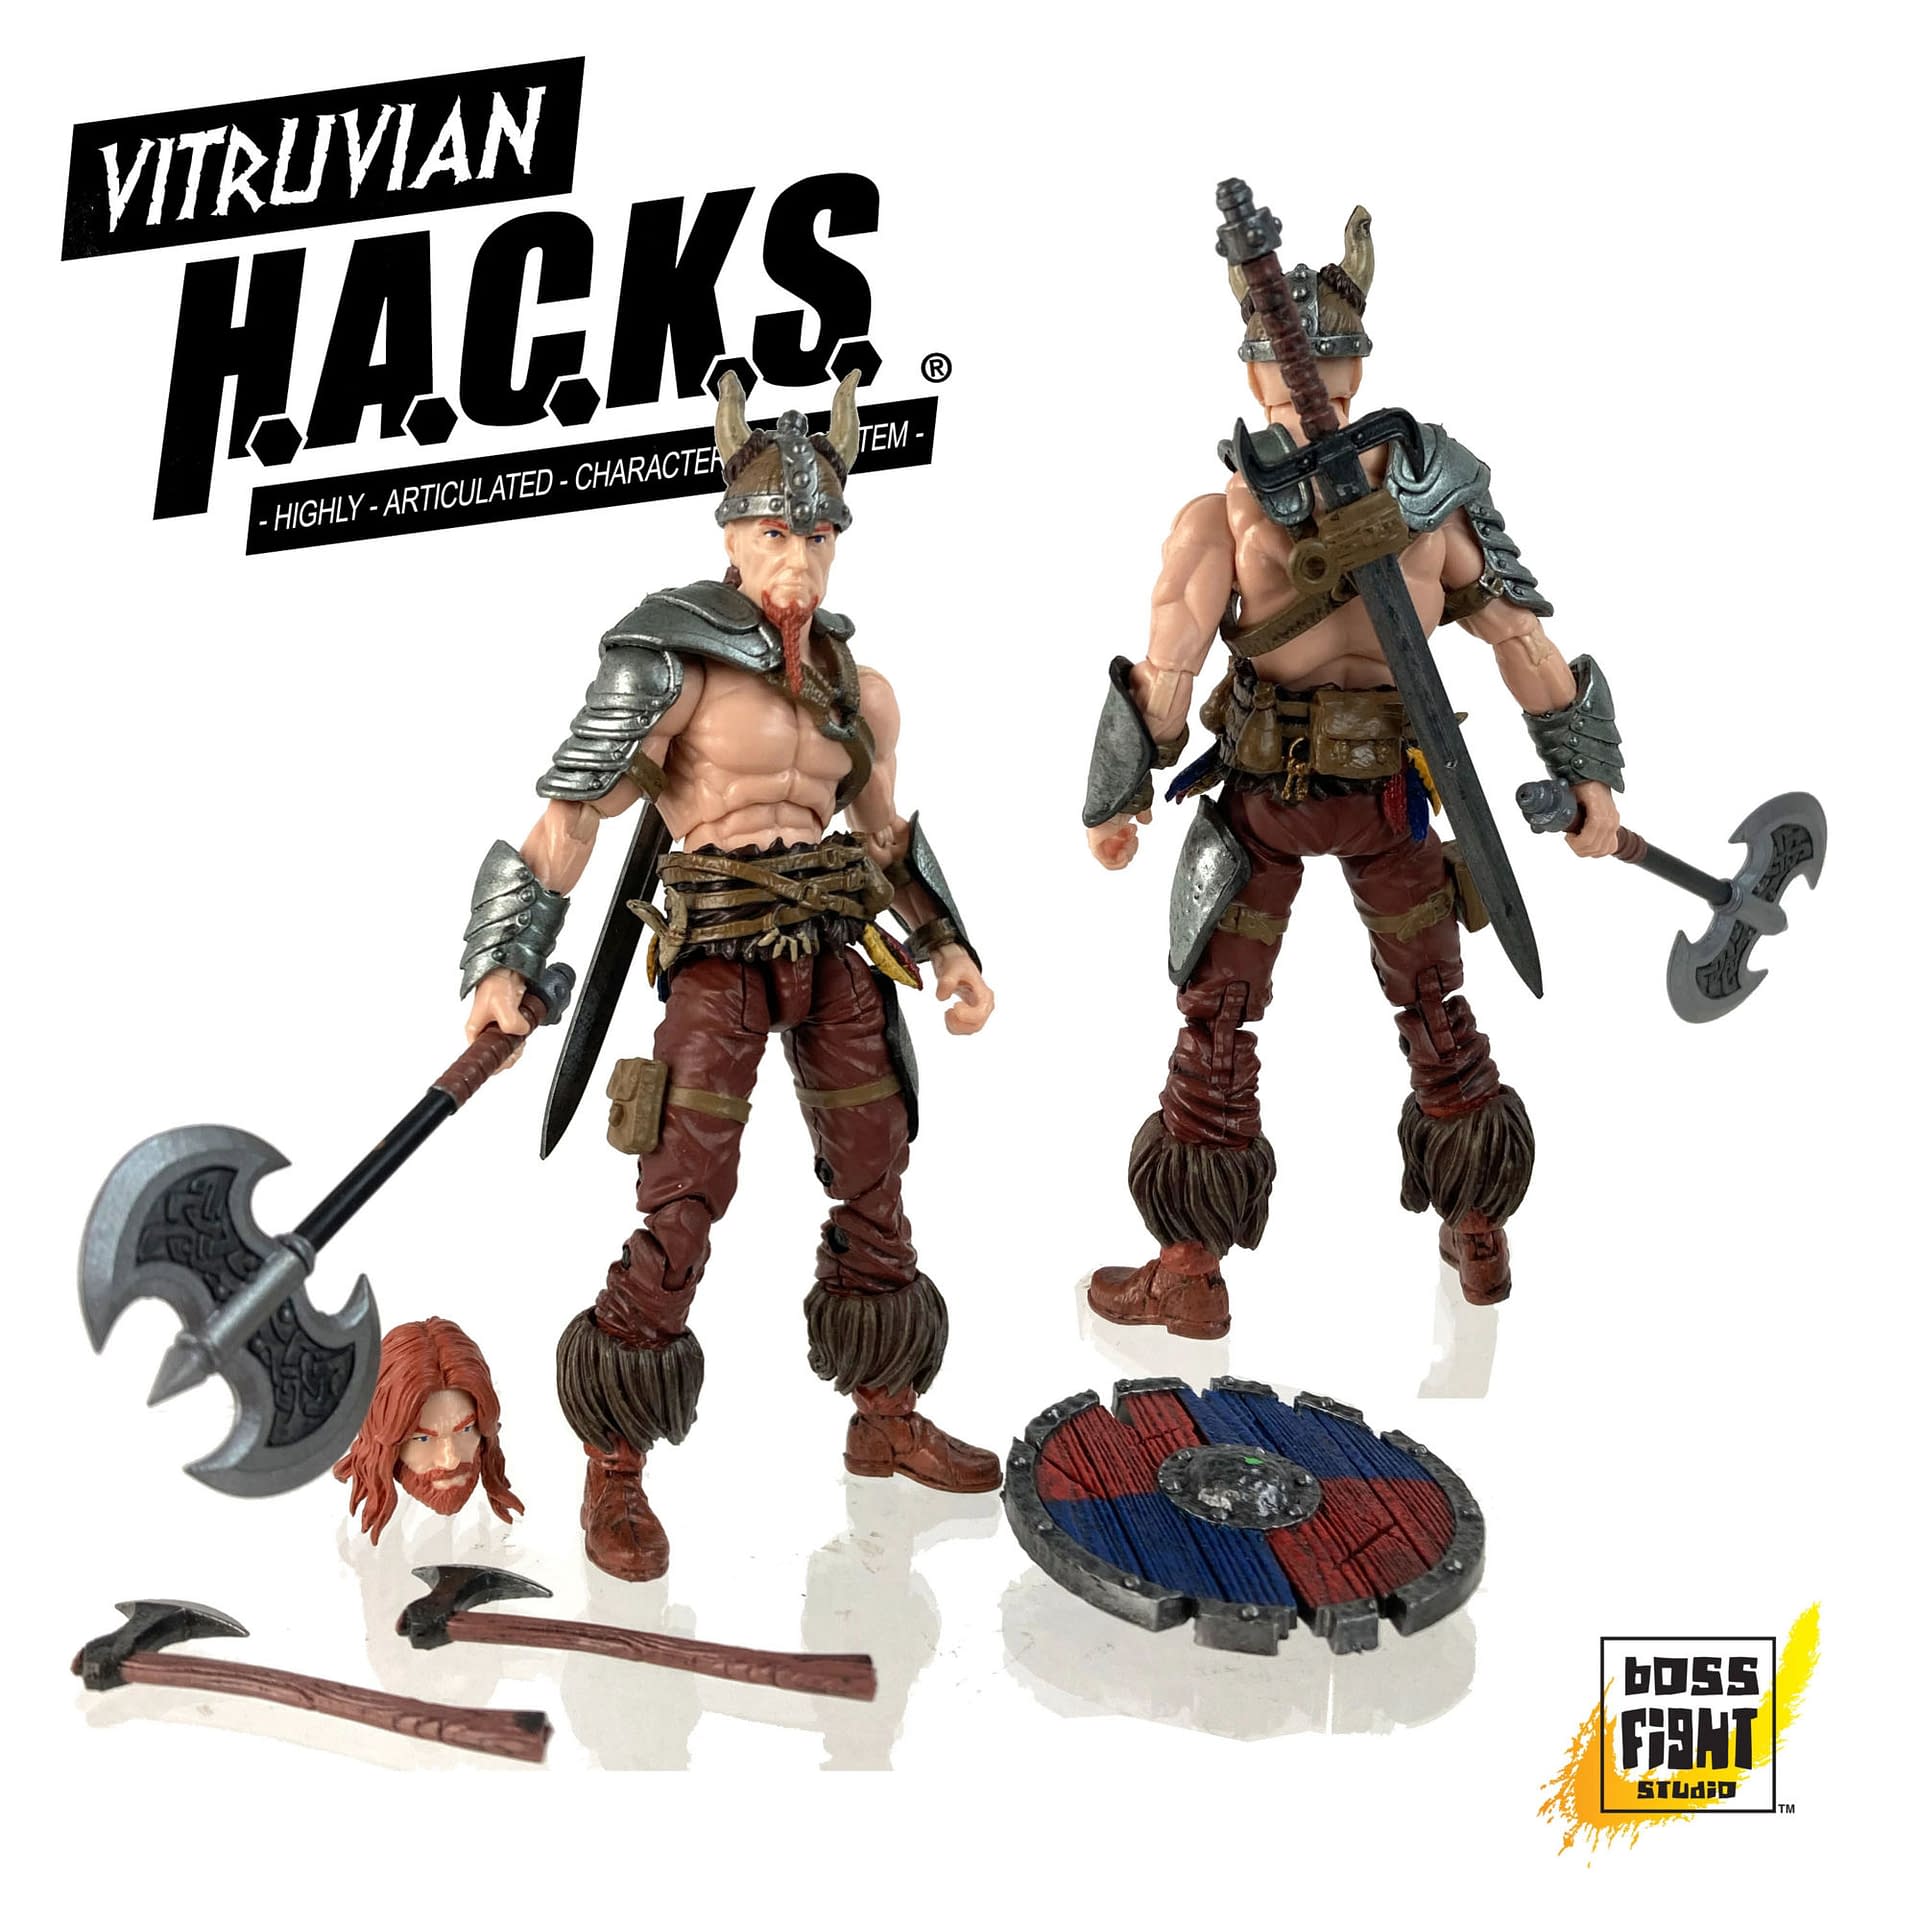 New Vitruvian HACKS Wave 6.5 Figures Arrive At Boss Fight Studio